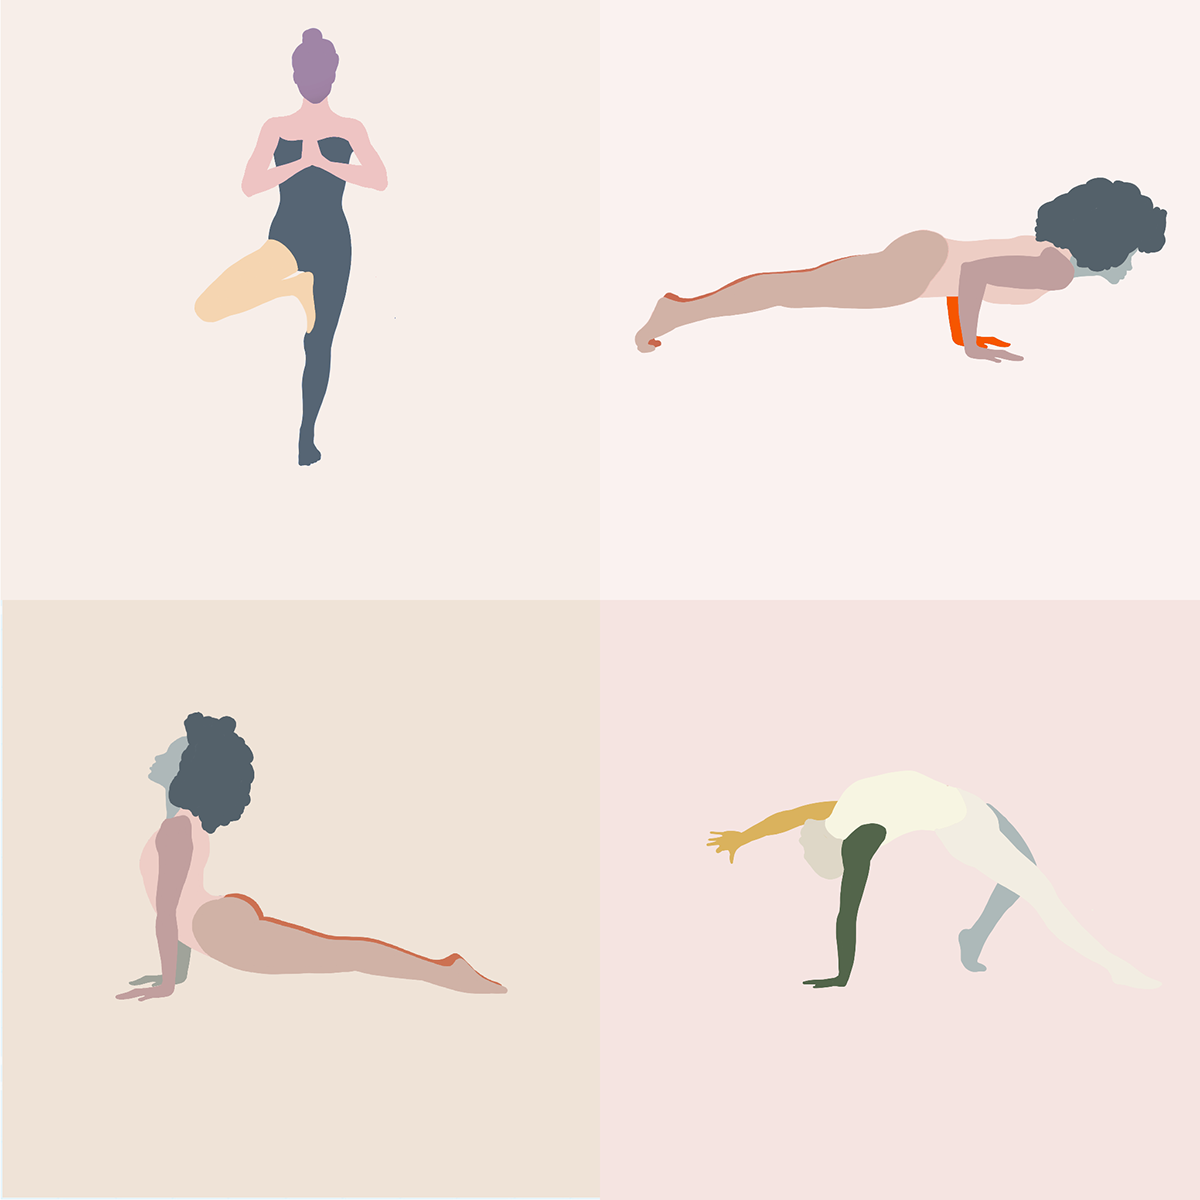 Does Yoga Make You Lean?
